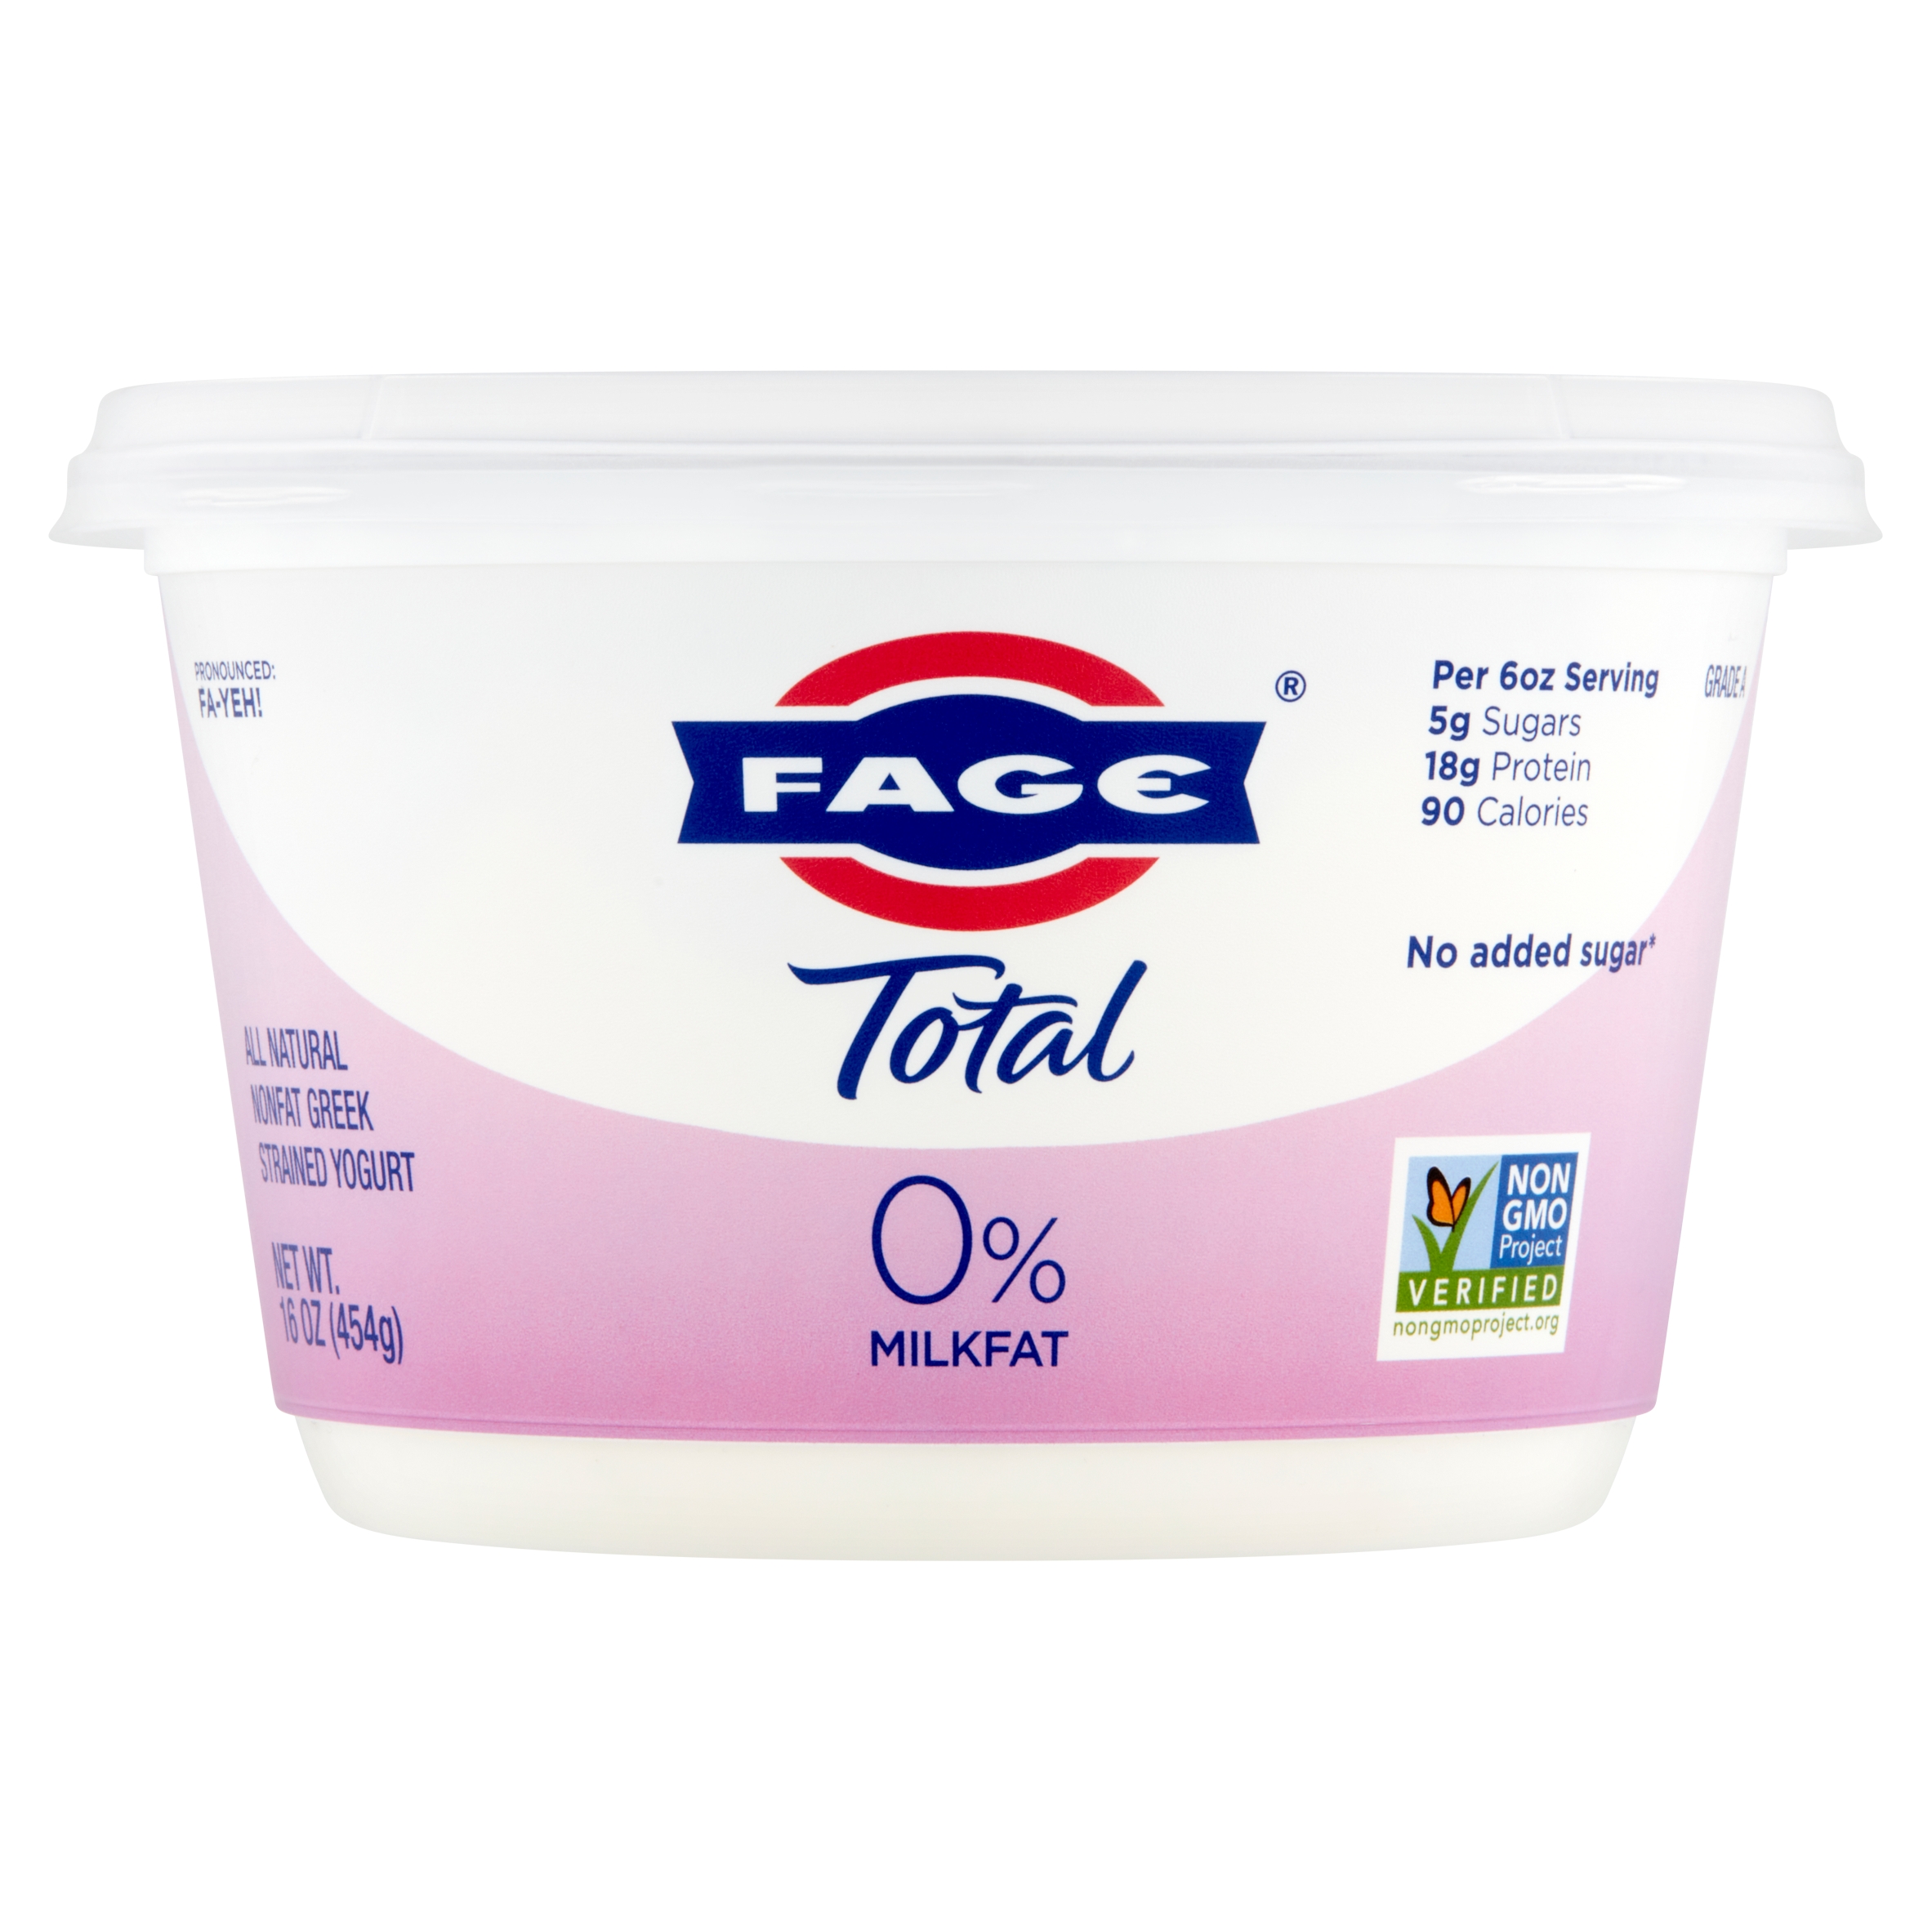 FAGE Total All Natural Nonfat Plain Greek Strained Yogurt, 16 oz - image 2 of 7